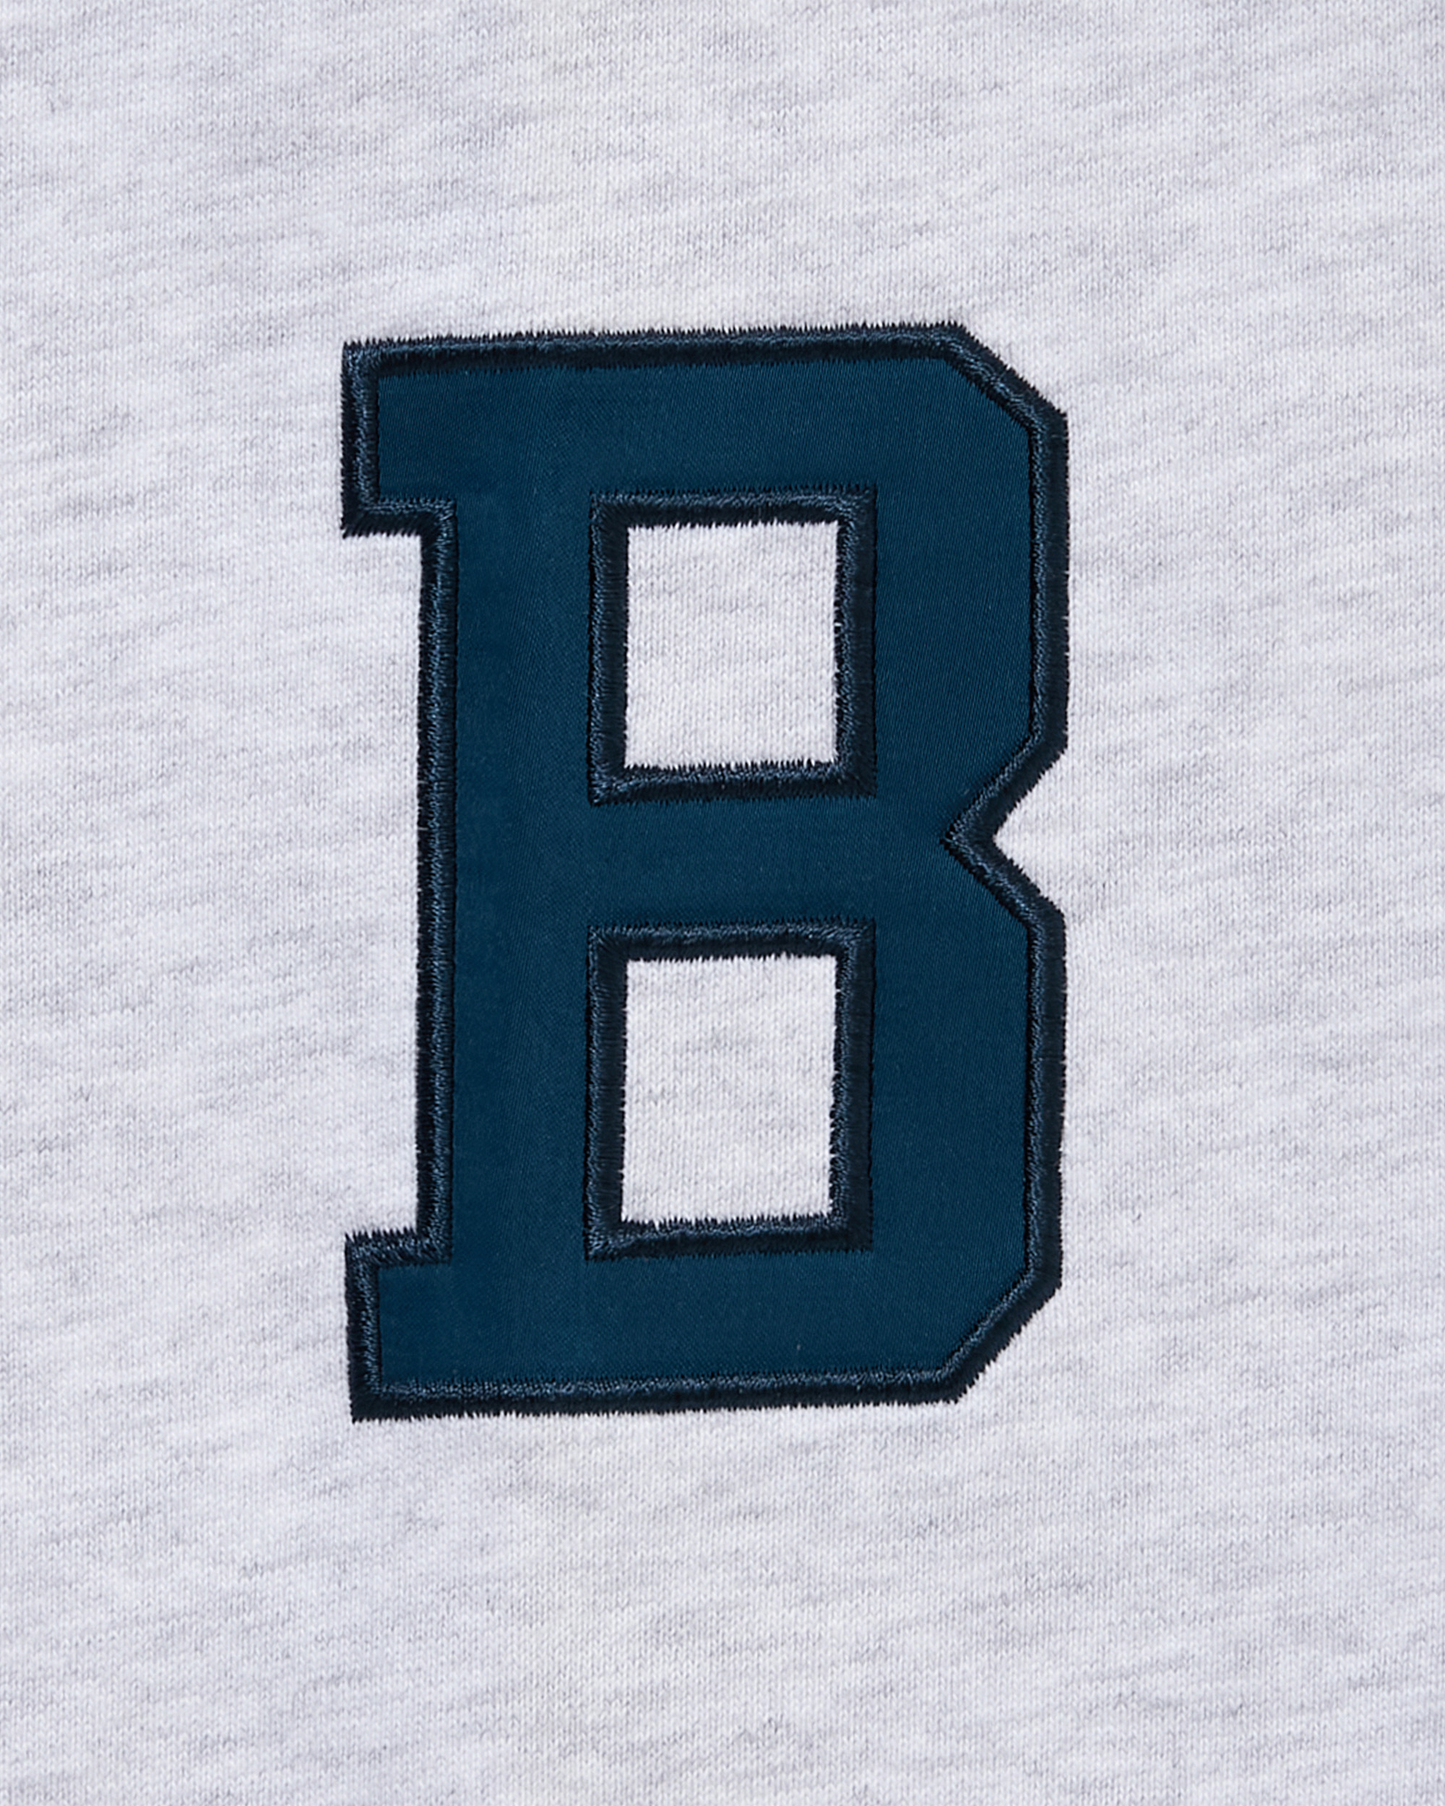 Applique Logo Sweatshirt B